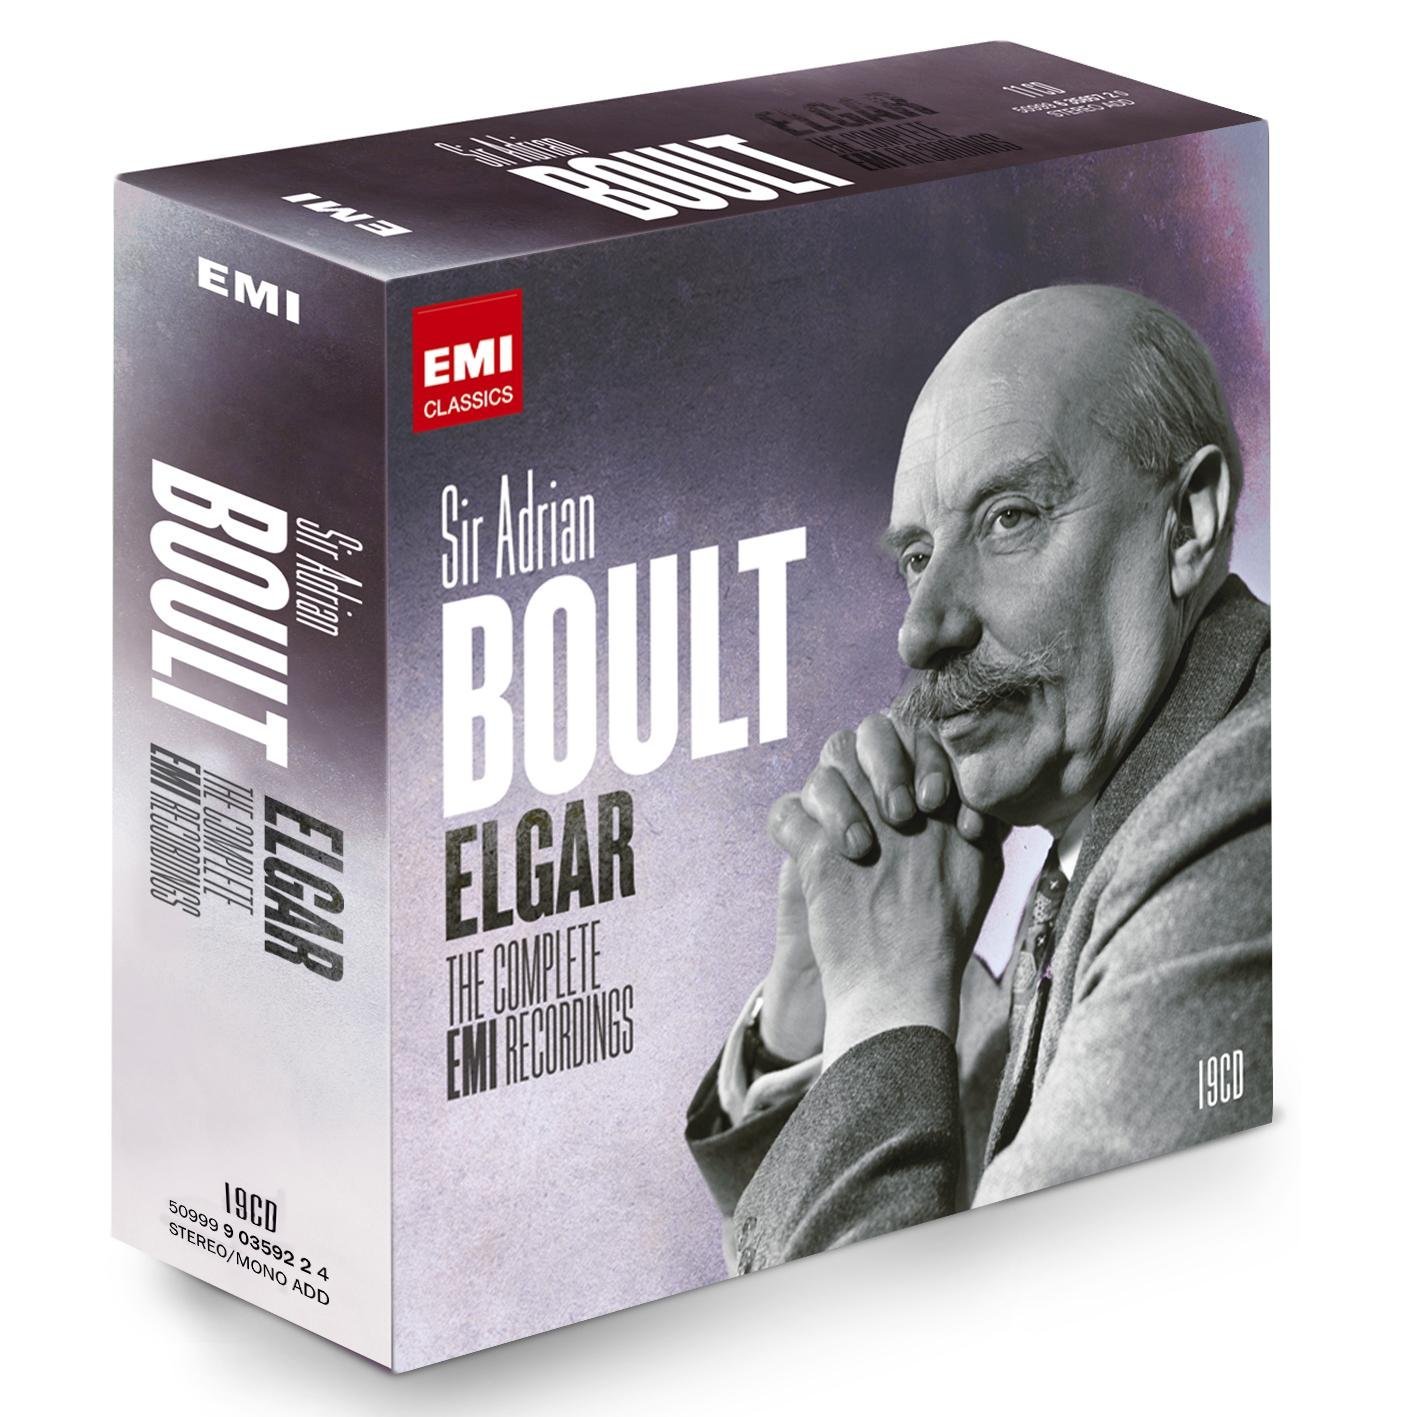 EMI Sir Adrian Boult  Elgar's Complete Recordings